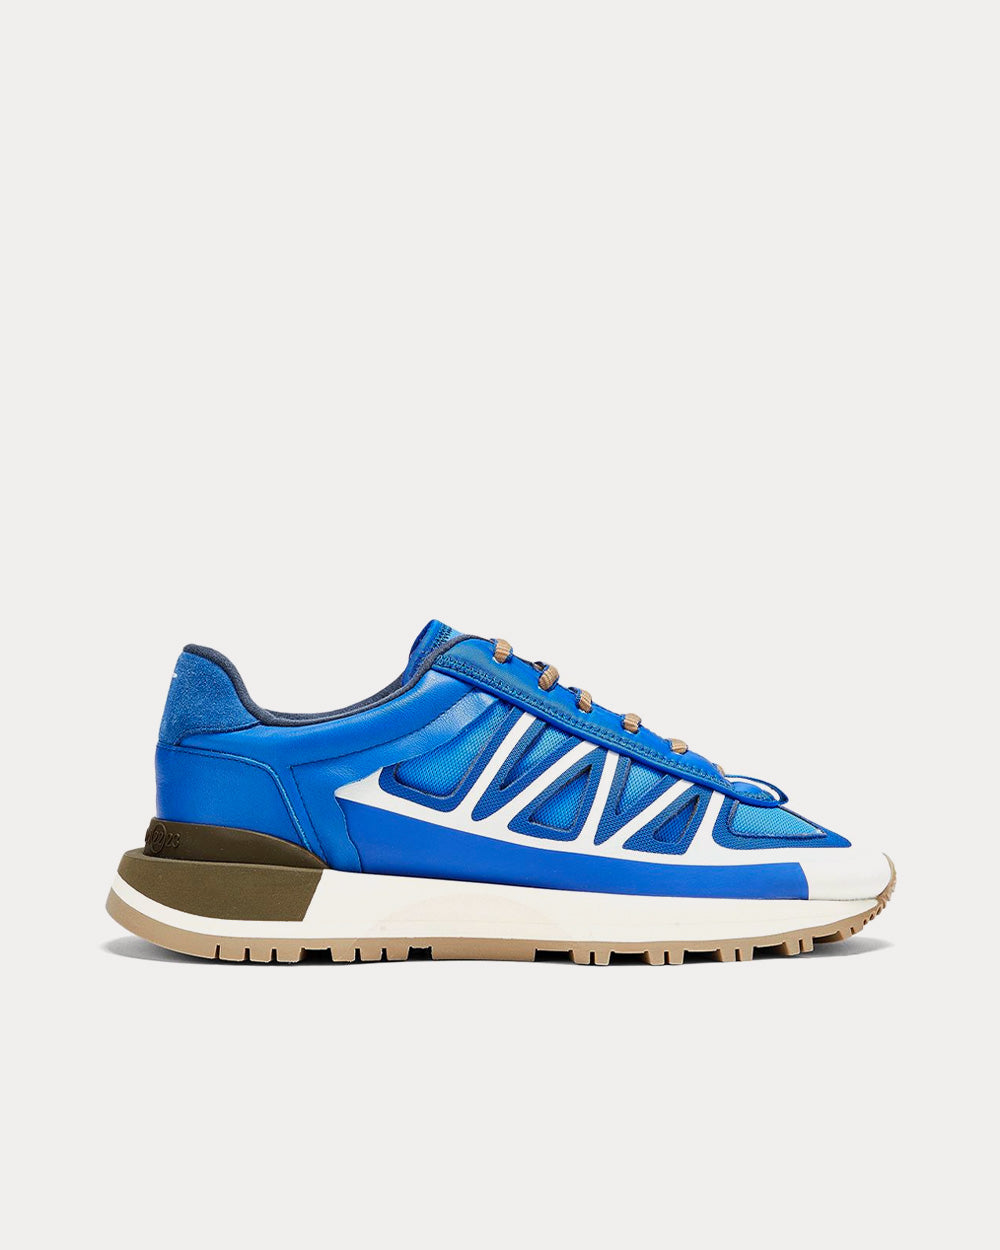 Maison Margiela - 50/50 Blue Low Top Sneakers